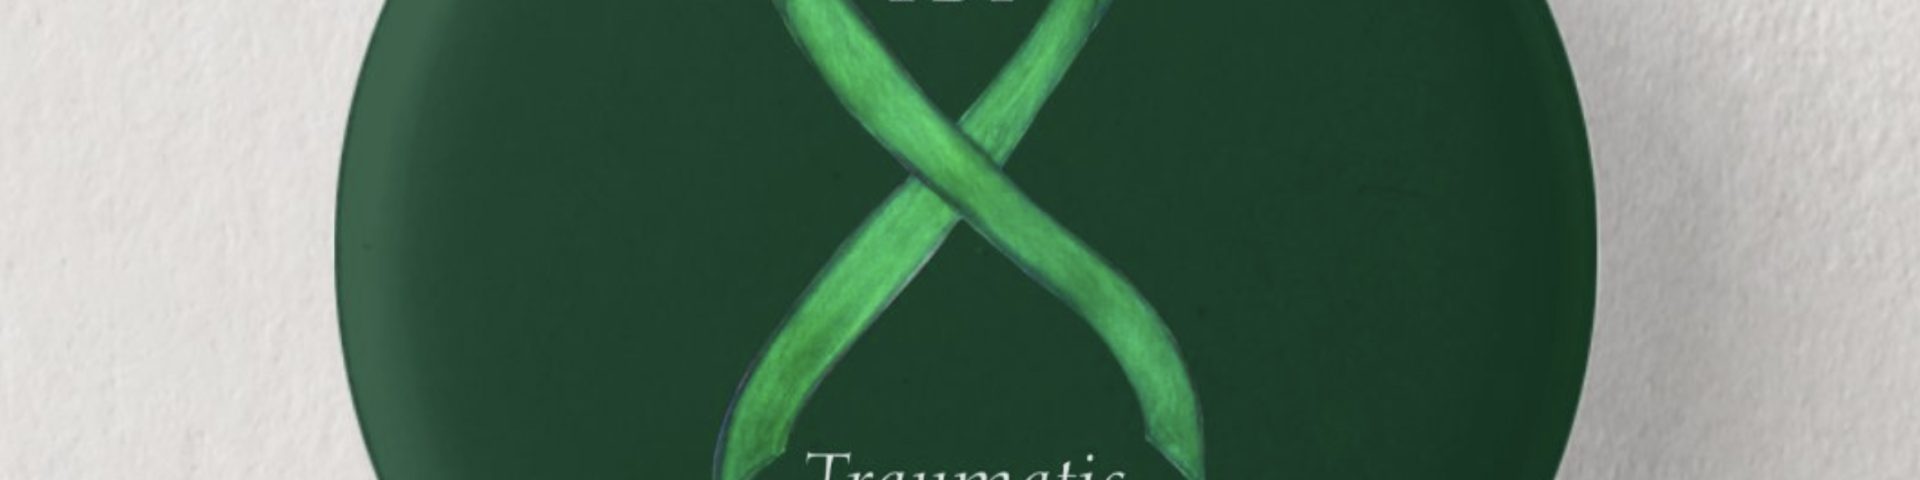 Traumatic Brain Injury (TBI) Green Awareness Ribbon Art Button Pins